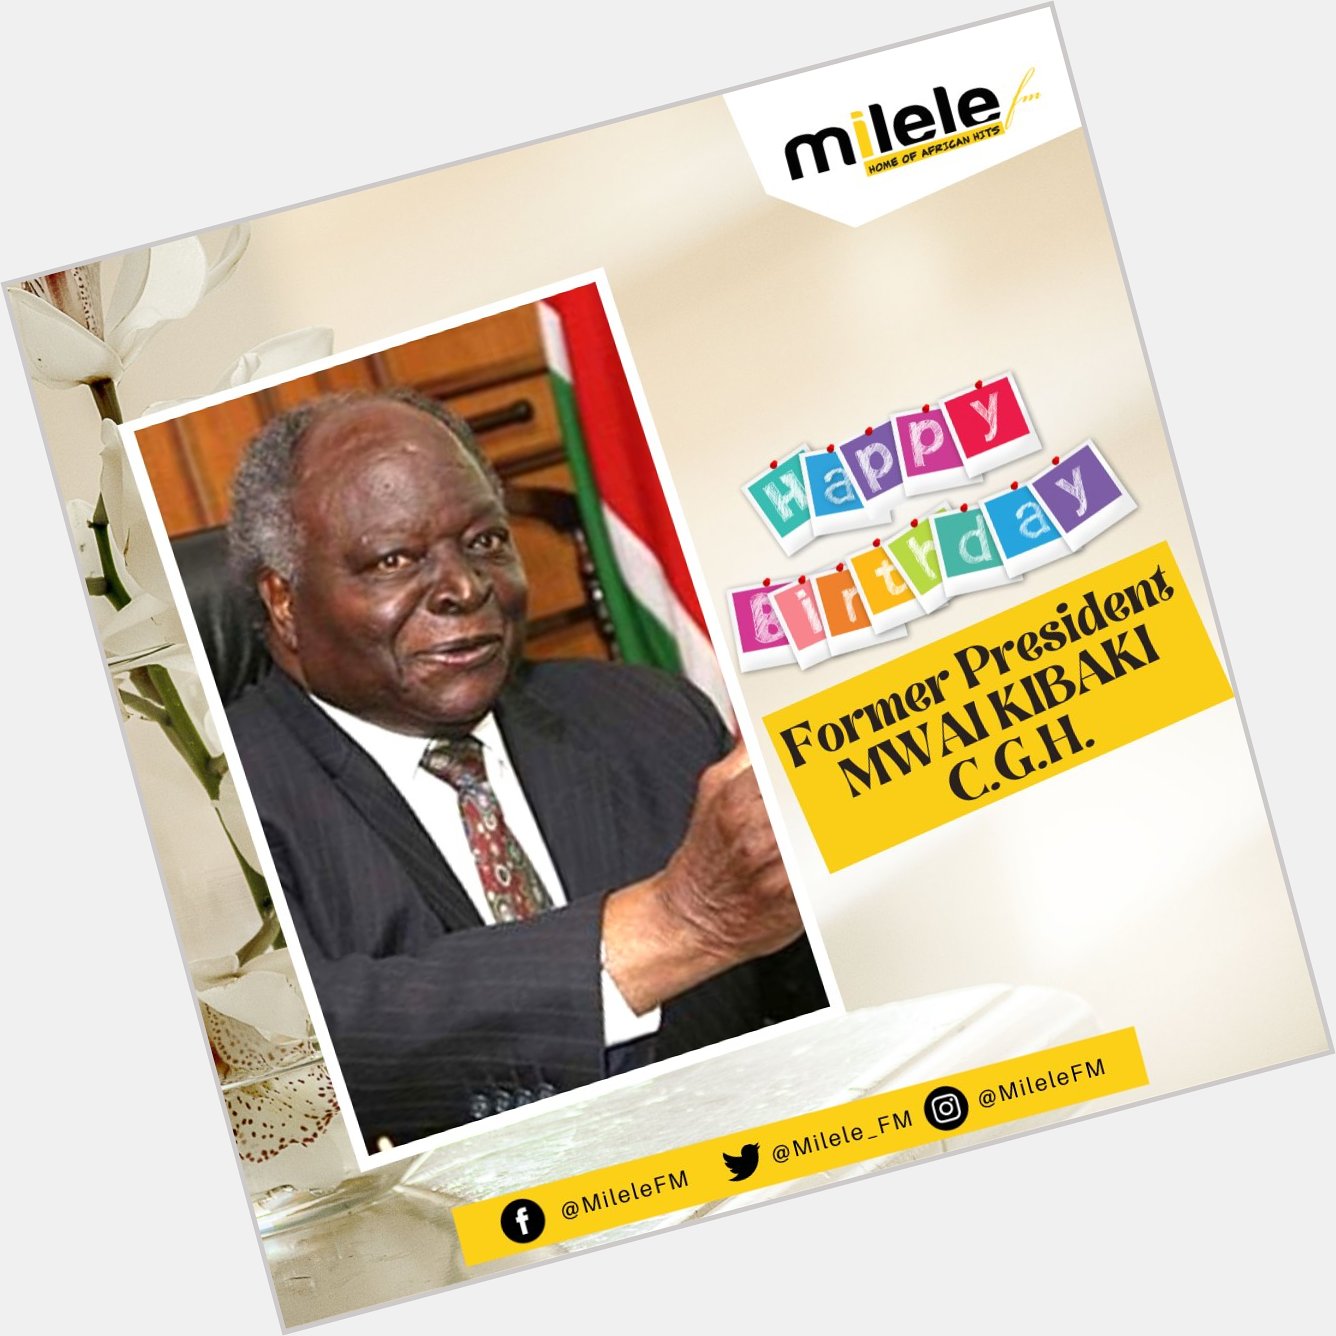 Help us wish Former President Mwai Kibaki C.G.H. a happy 90th birthday. 